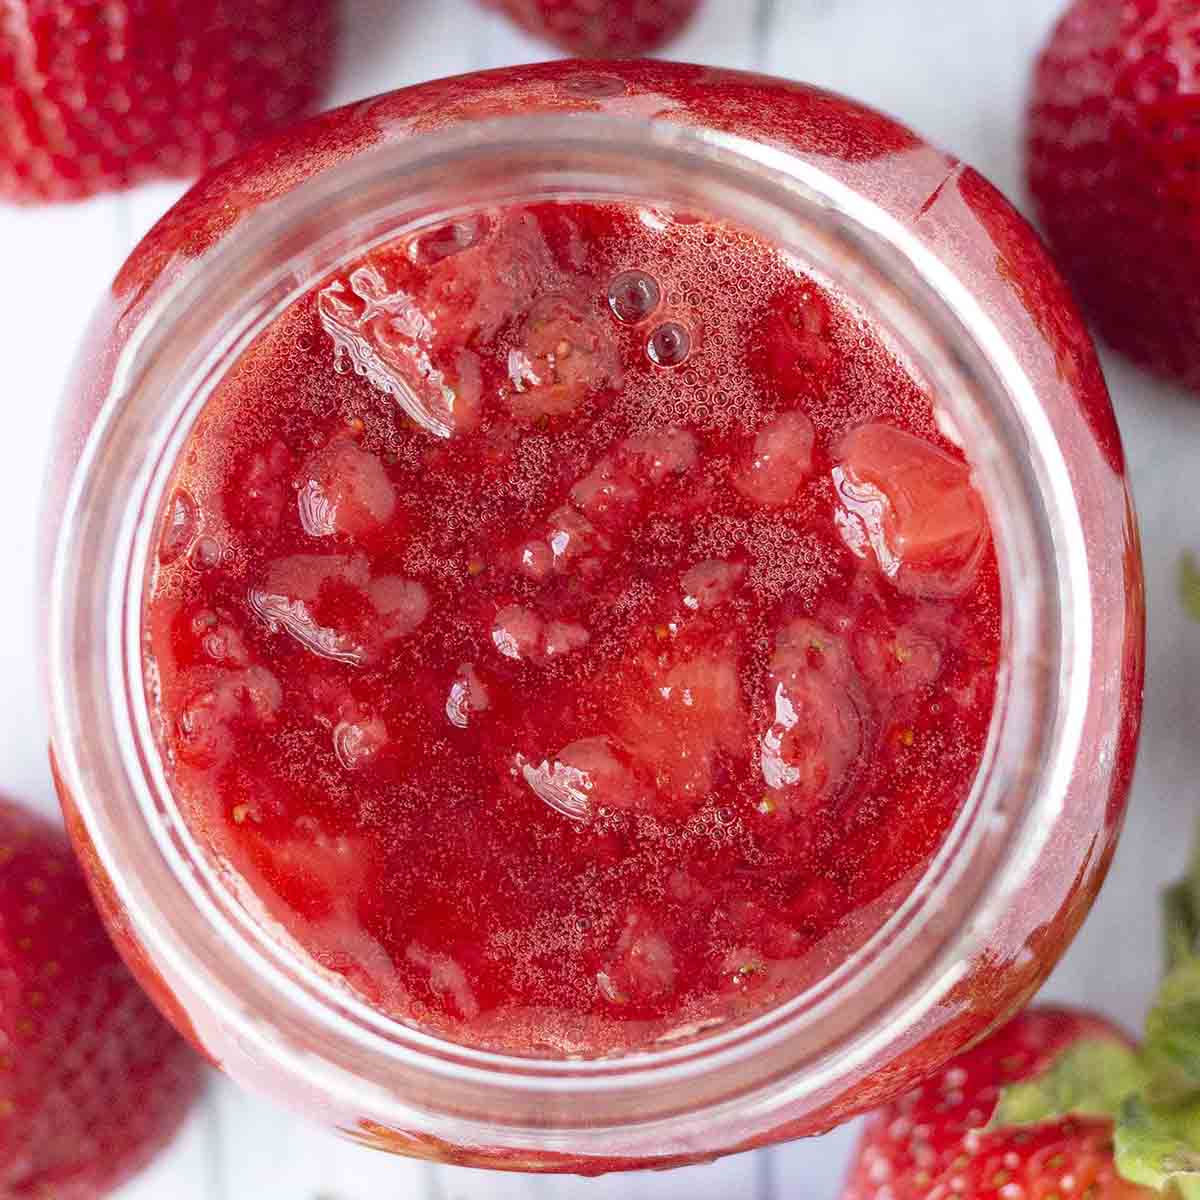 An overhead shot of homemade strawberry sauce in a glass jar.